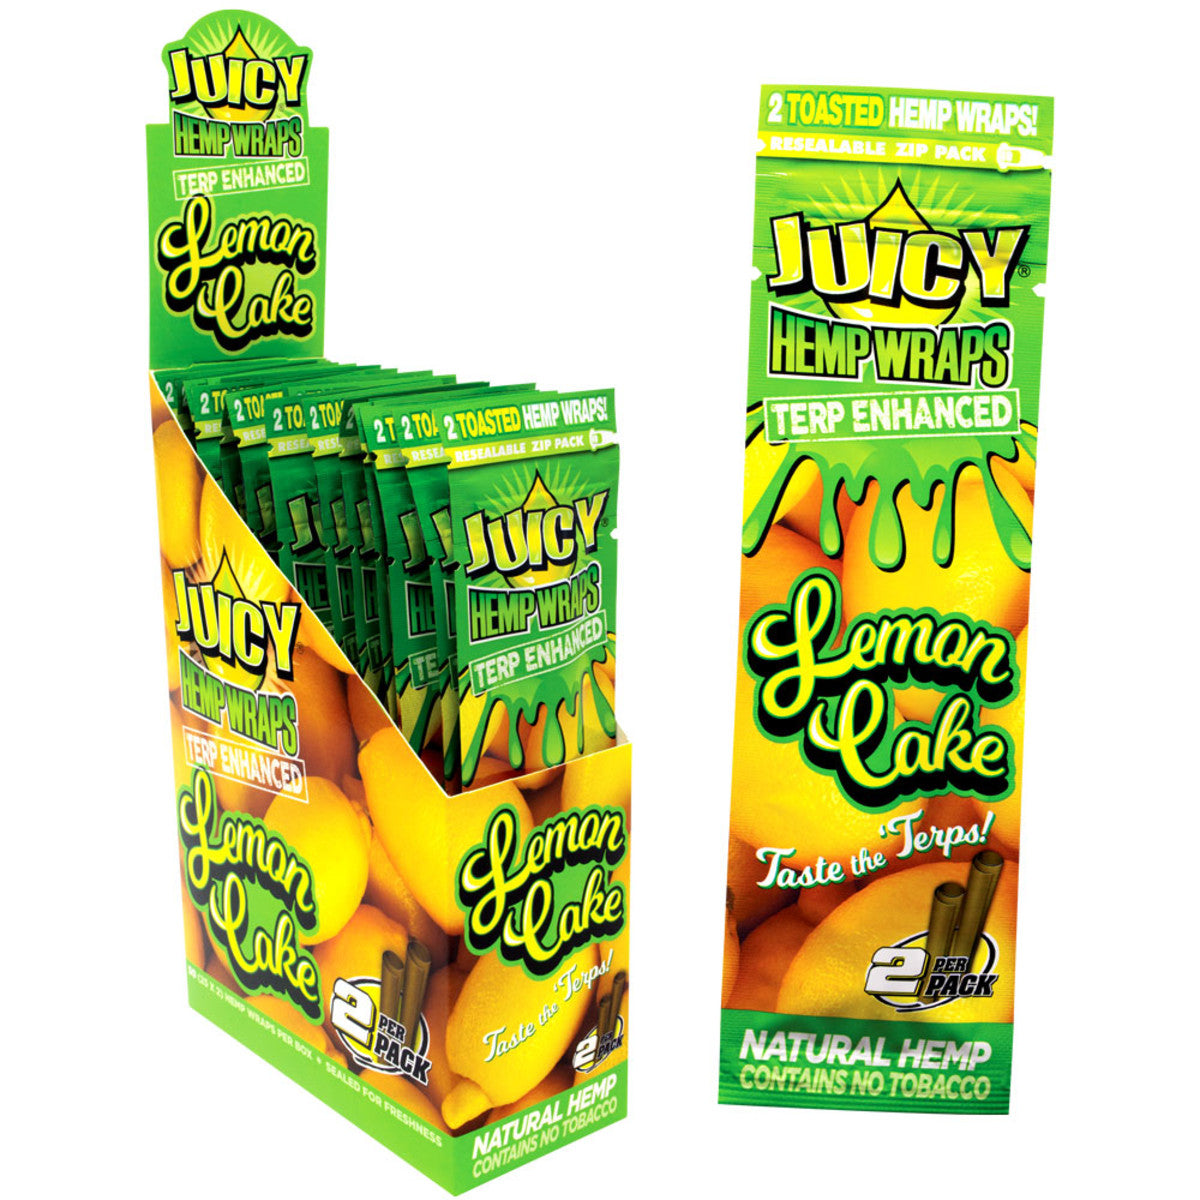 Juicy Terp Enhanced Hemp Wraps Lemon Cake Box